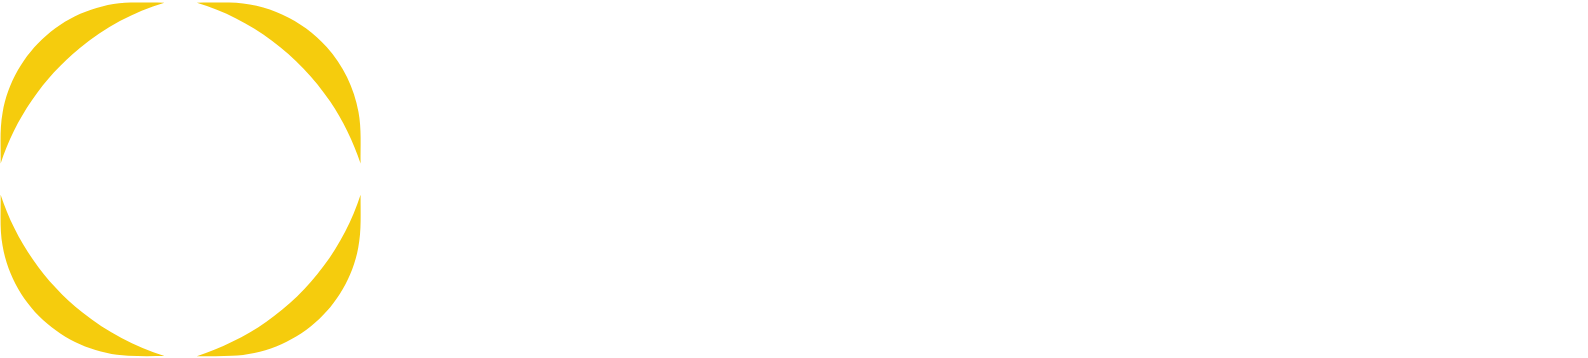 Privia Health Group Logo groß für dunkle Hintergründe (transparentes PNG)